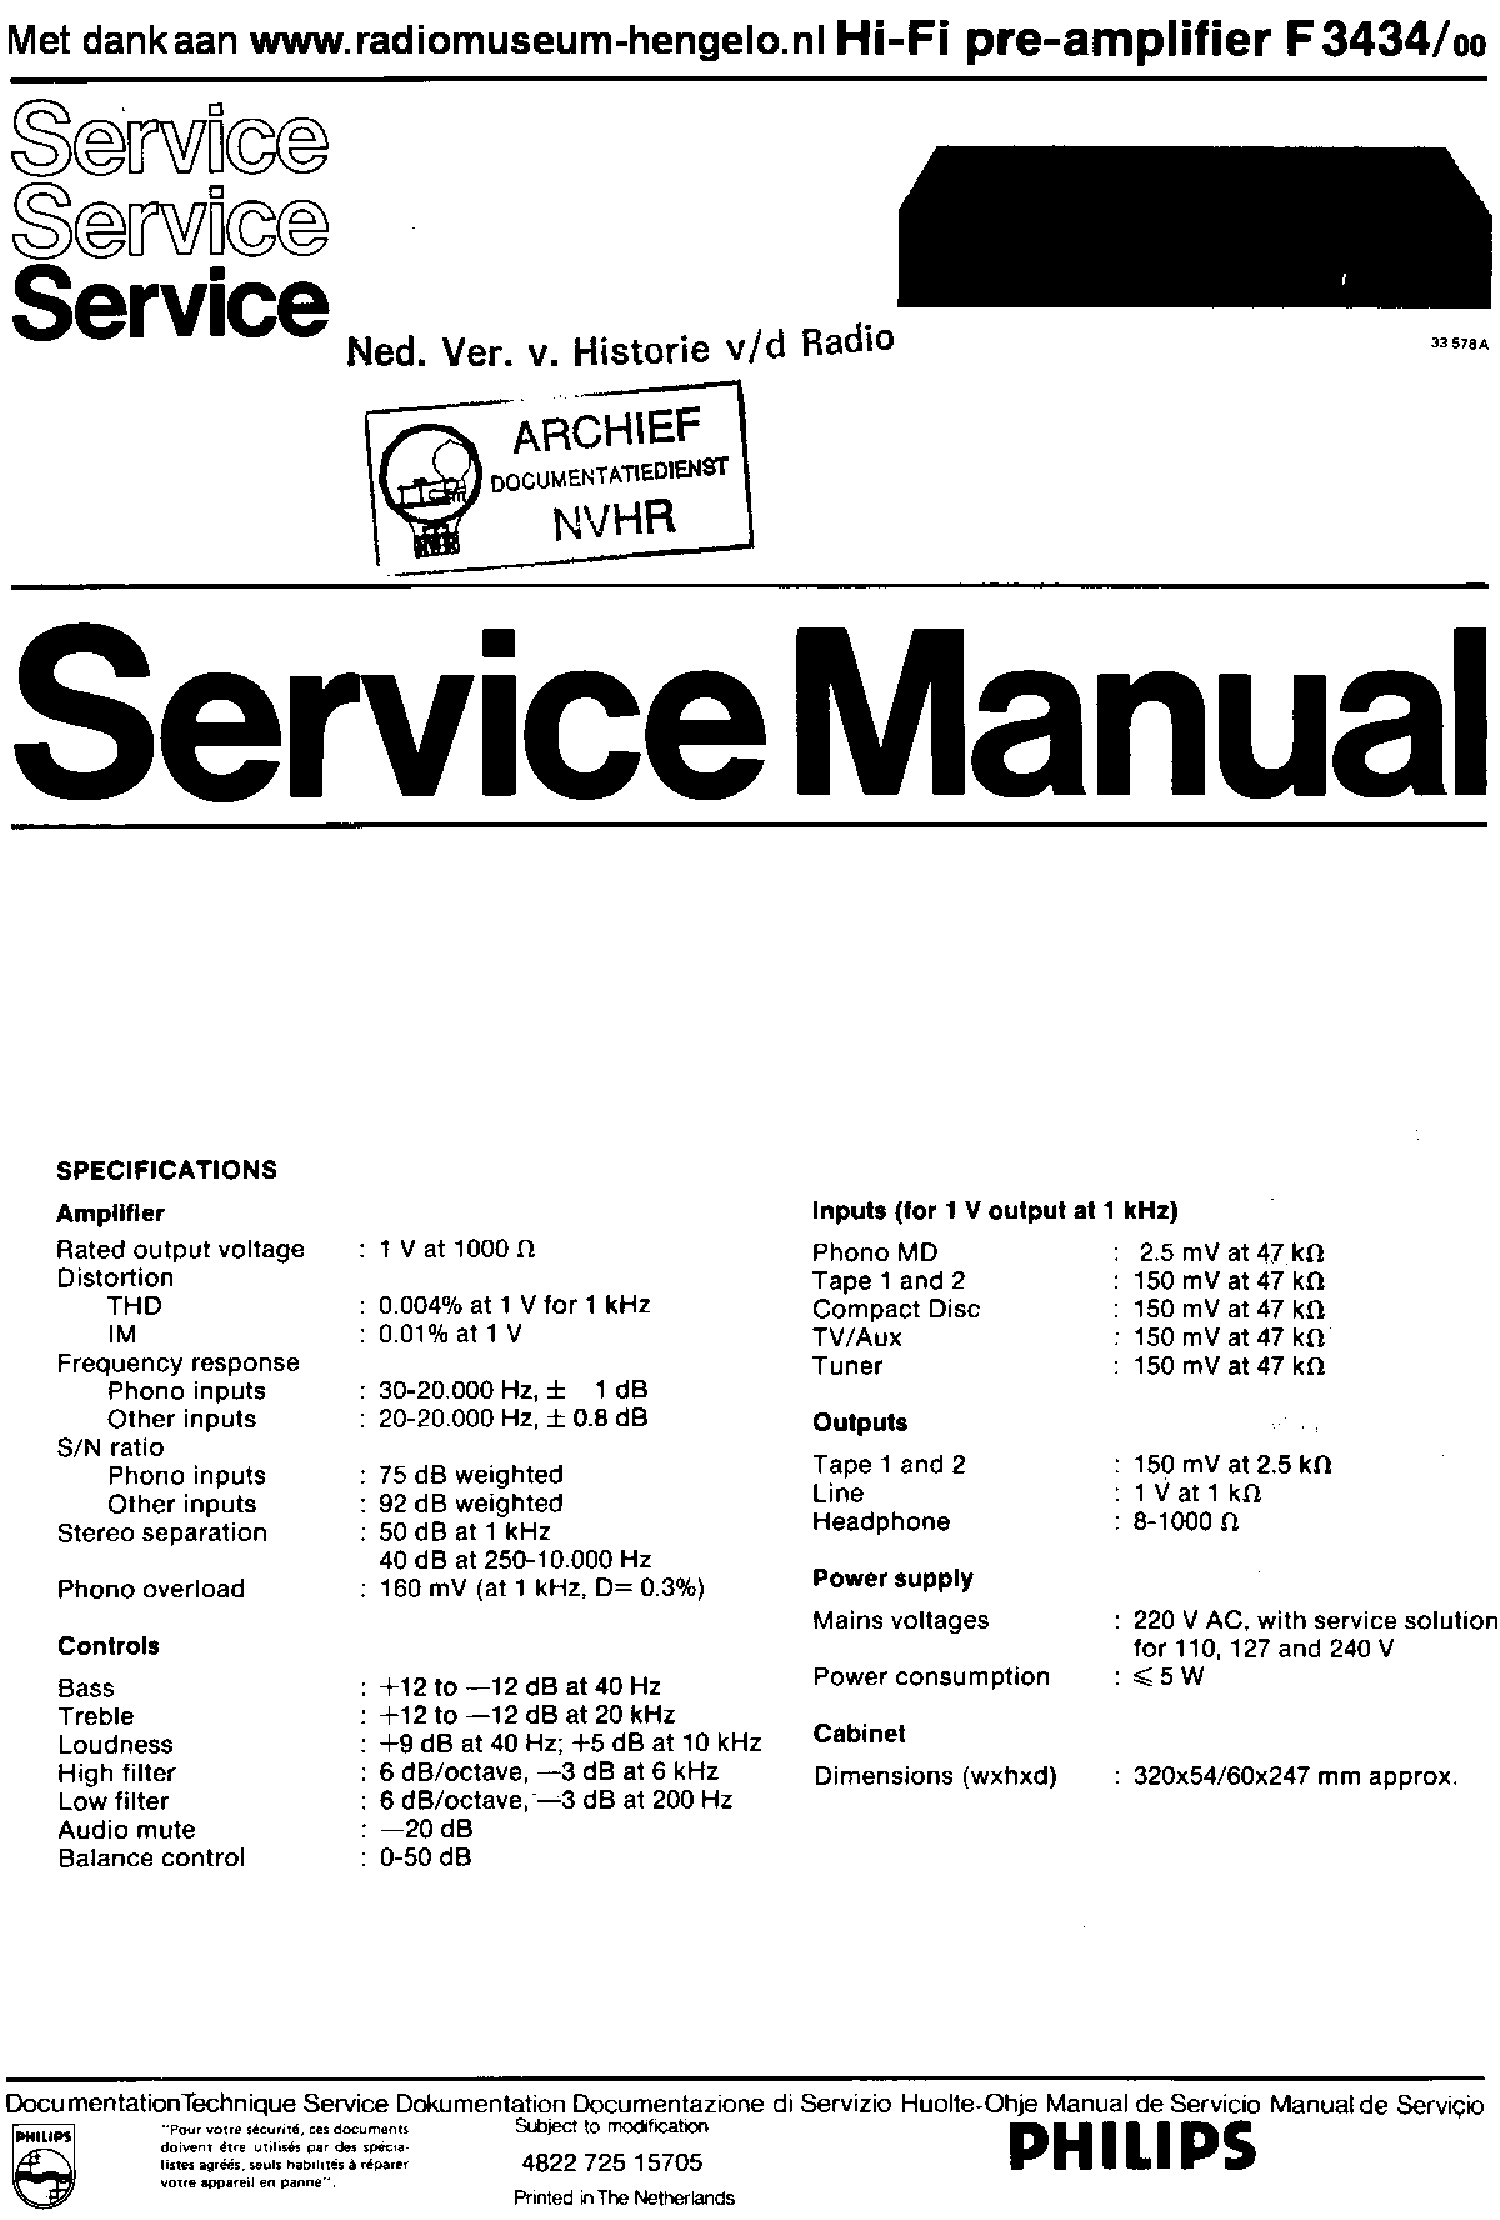 PHILIPS F3434-00 HIFI PREAMPLIFRER SM service manual (1st page)